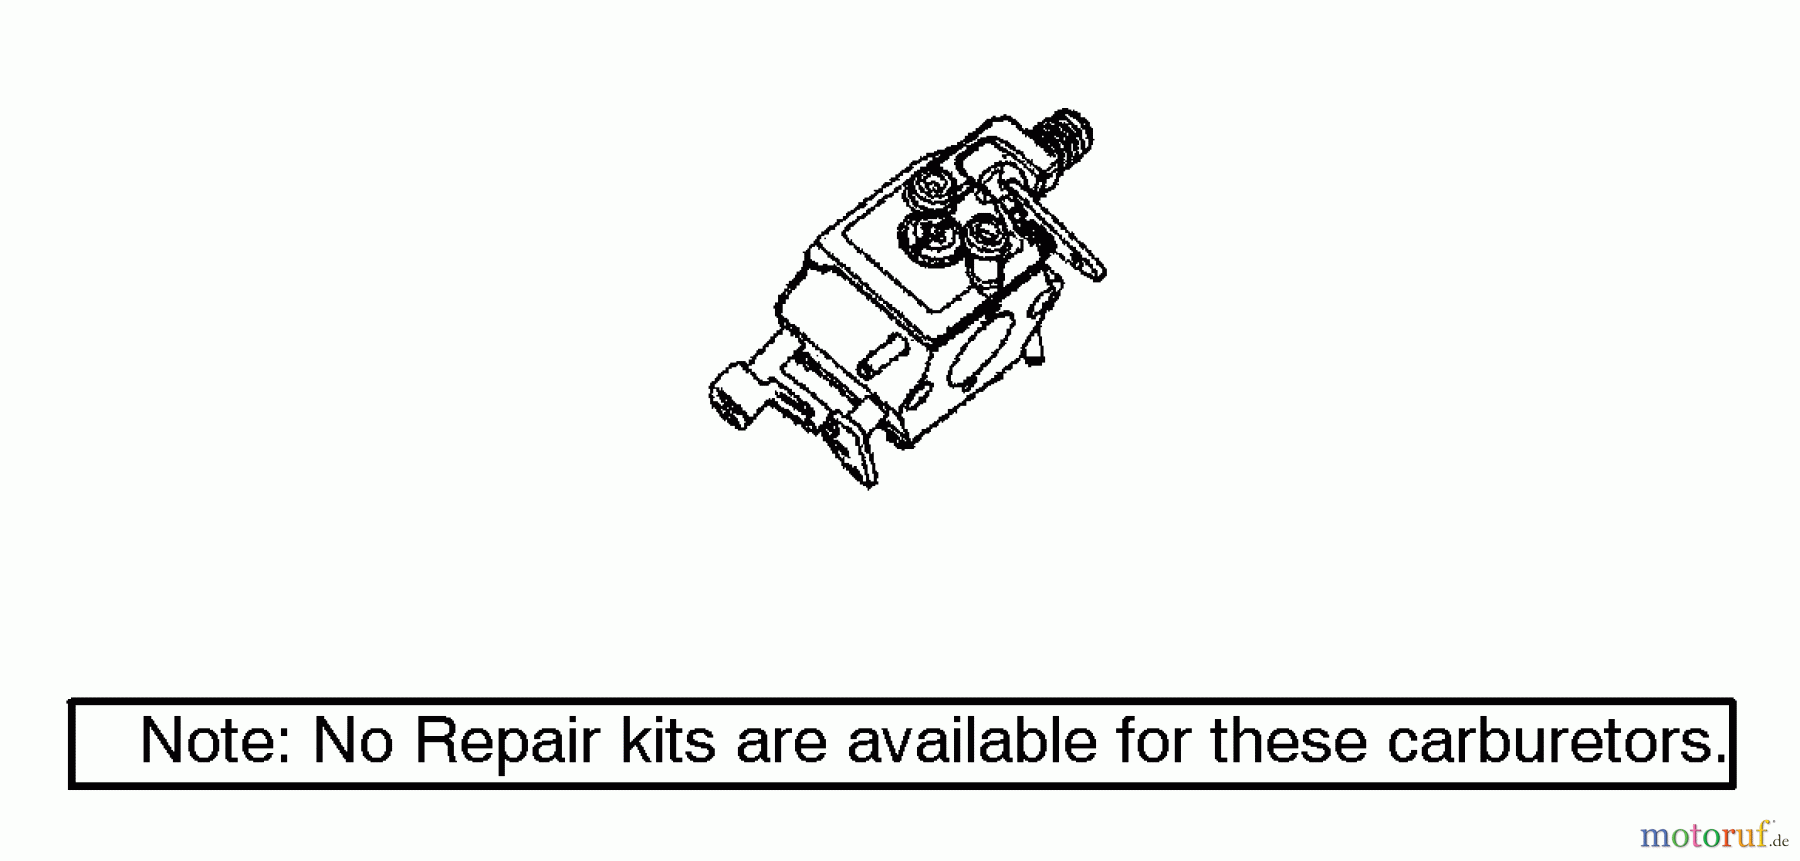  Poulan / Weed Eater Motorsägen 2150 (Type 5) - Poulan Woodshark / Woodsman Chainsaw Carburetor Assembly Kits 530071620/530071820/530071821